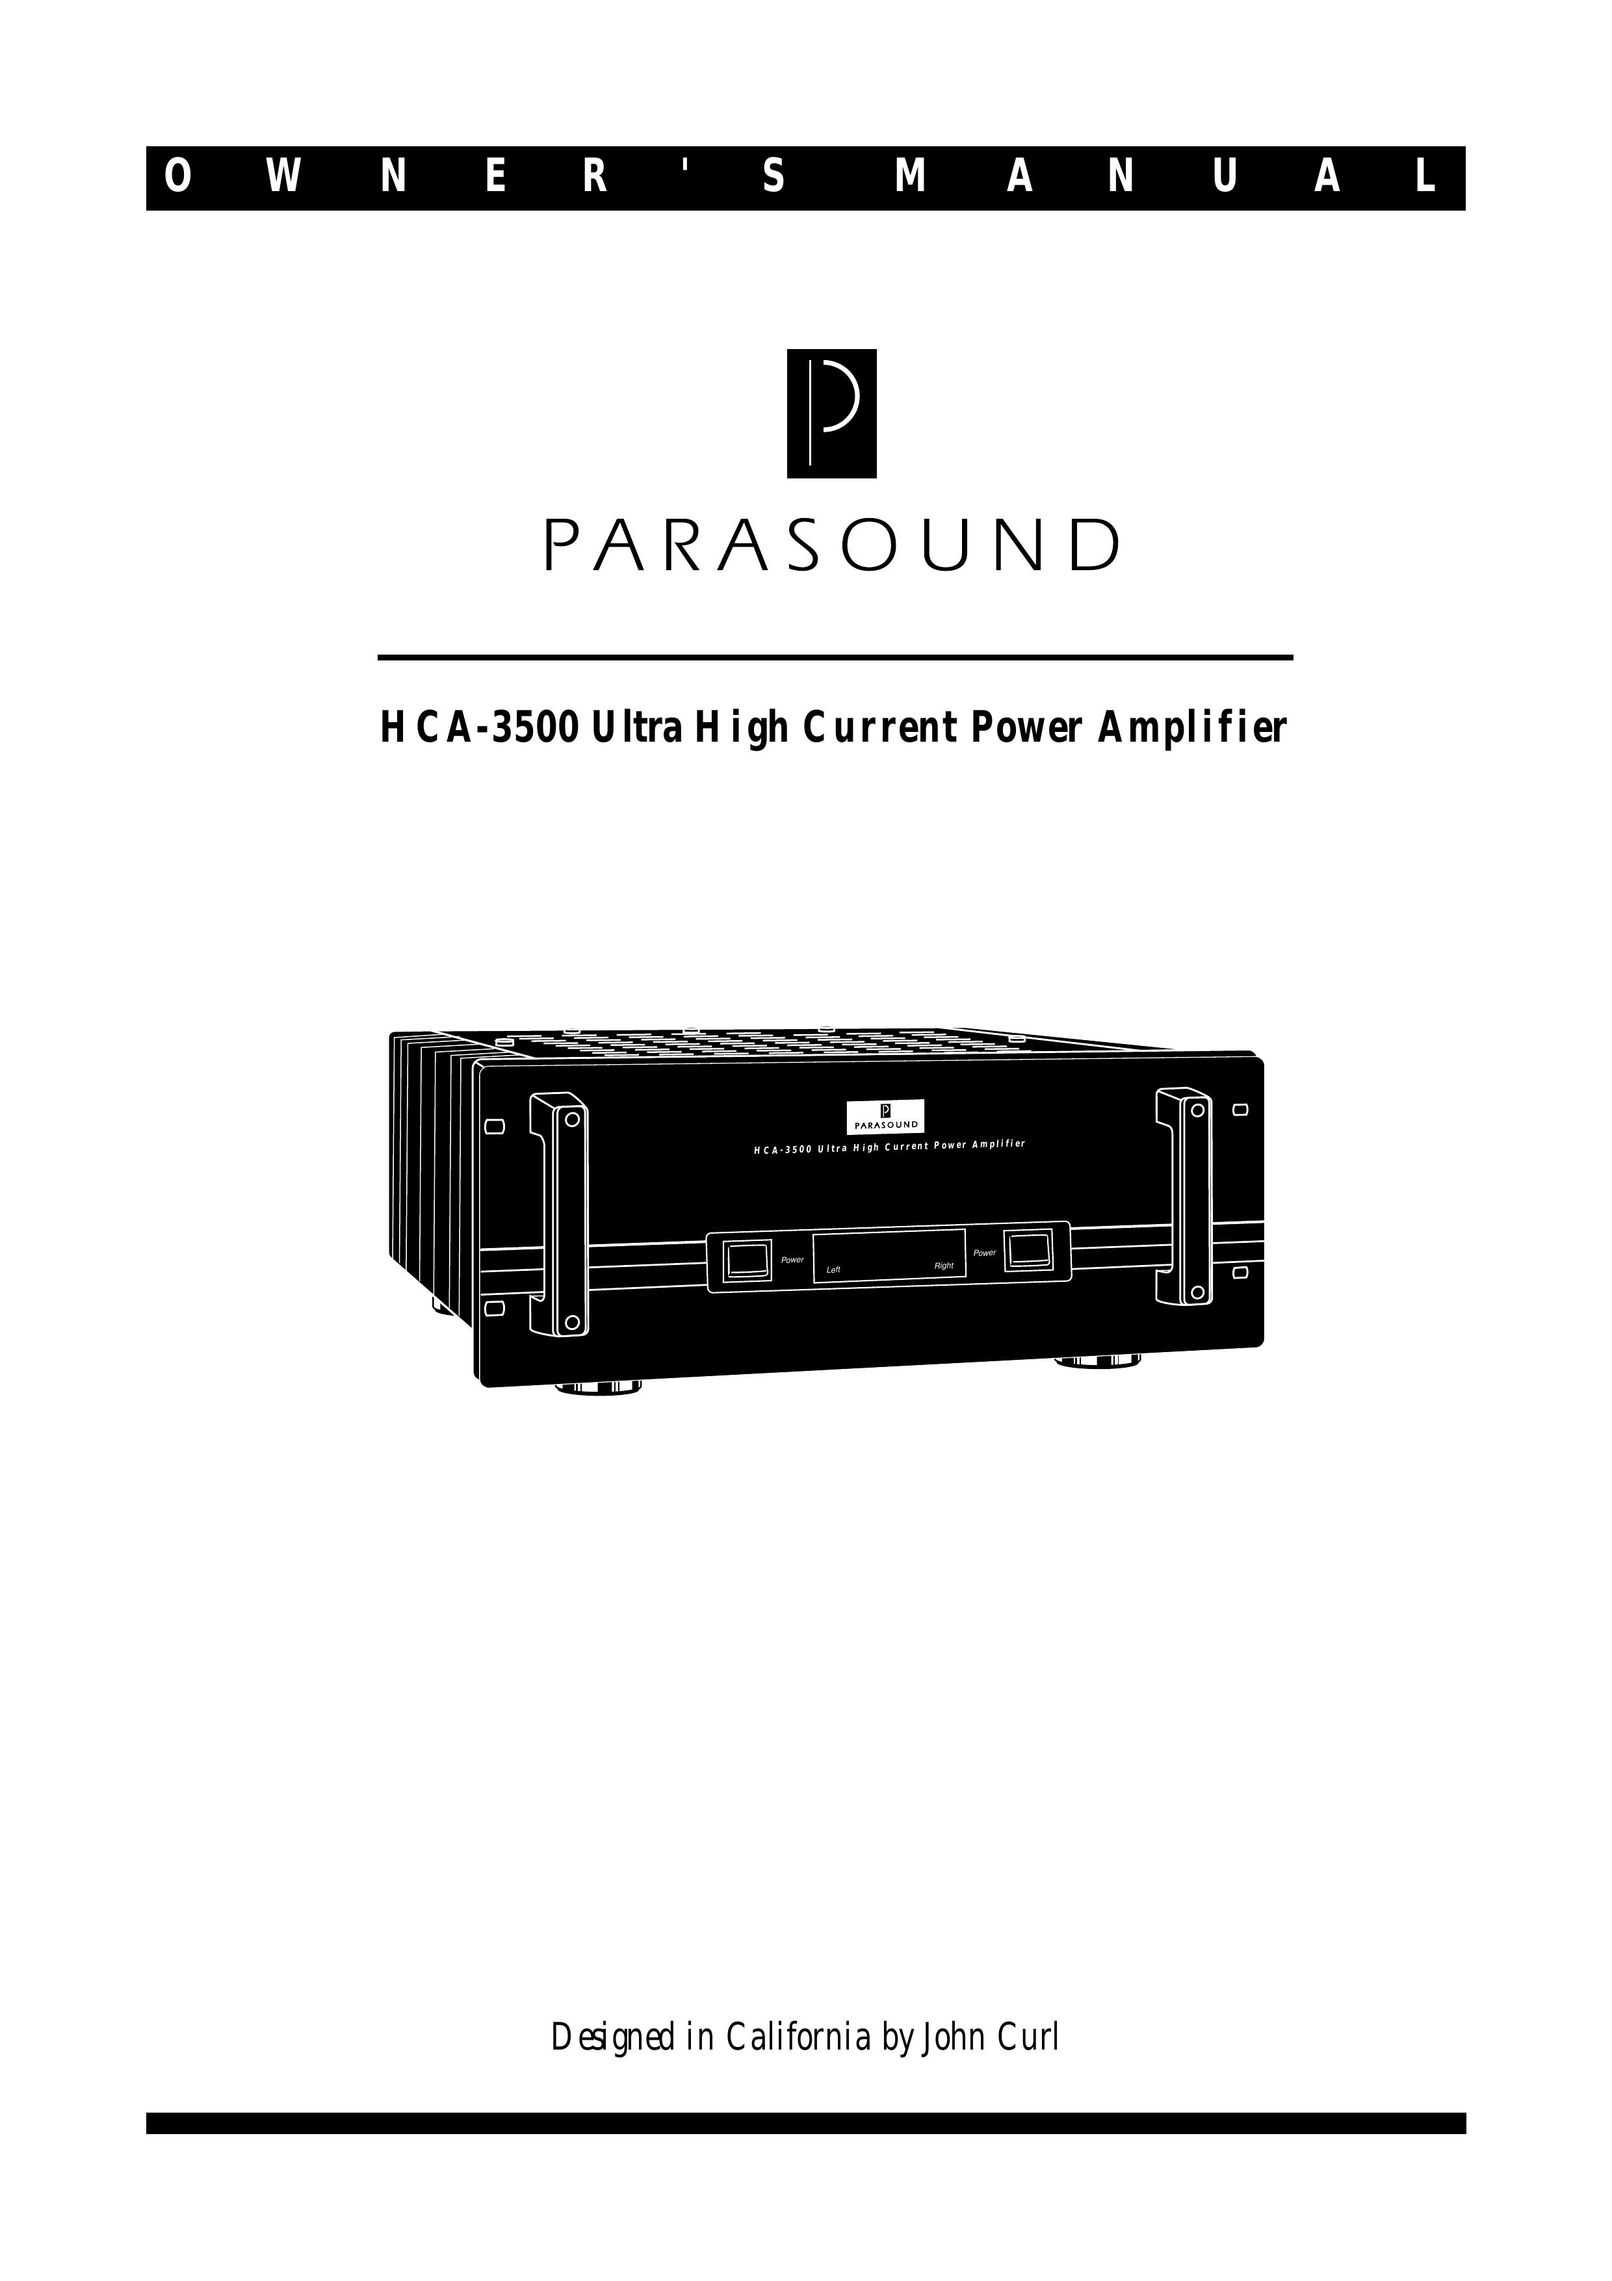 Parasound HCA-3500 Stereo Amplifier User Manual